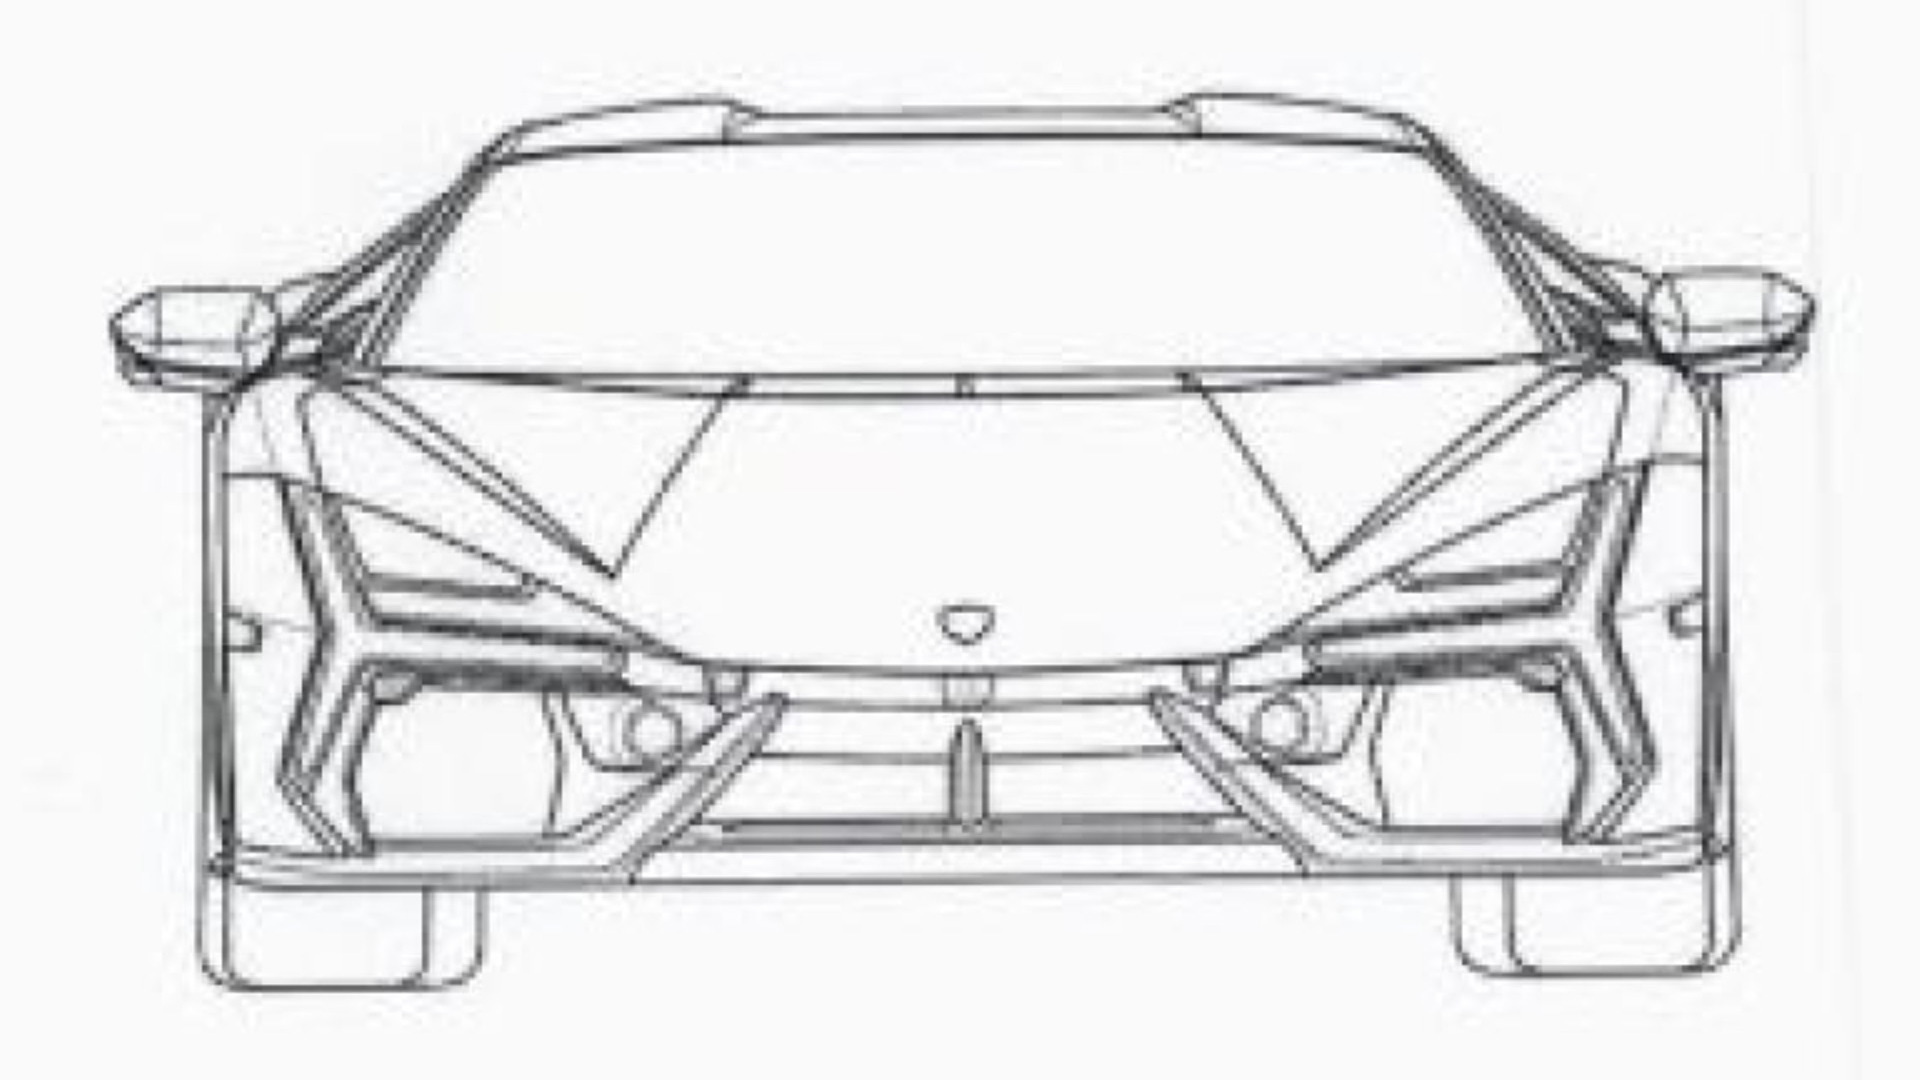 Alleged patent drawings for Lamborghini Aventador successor